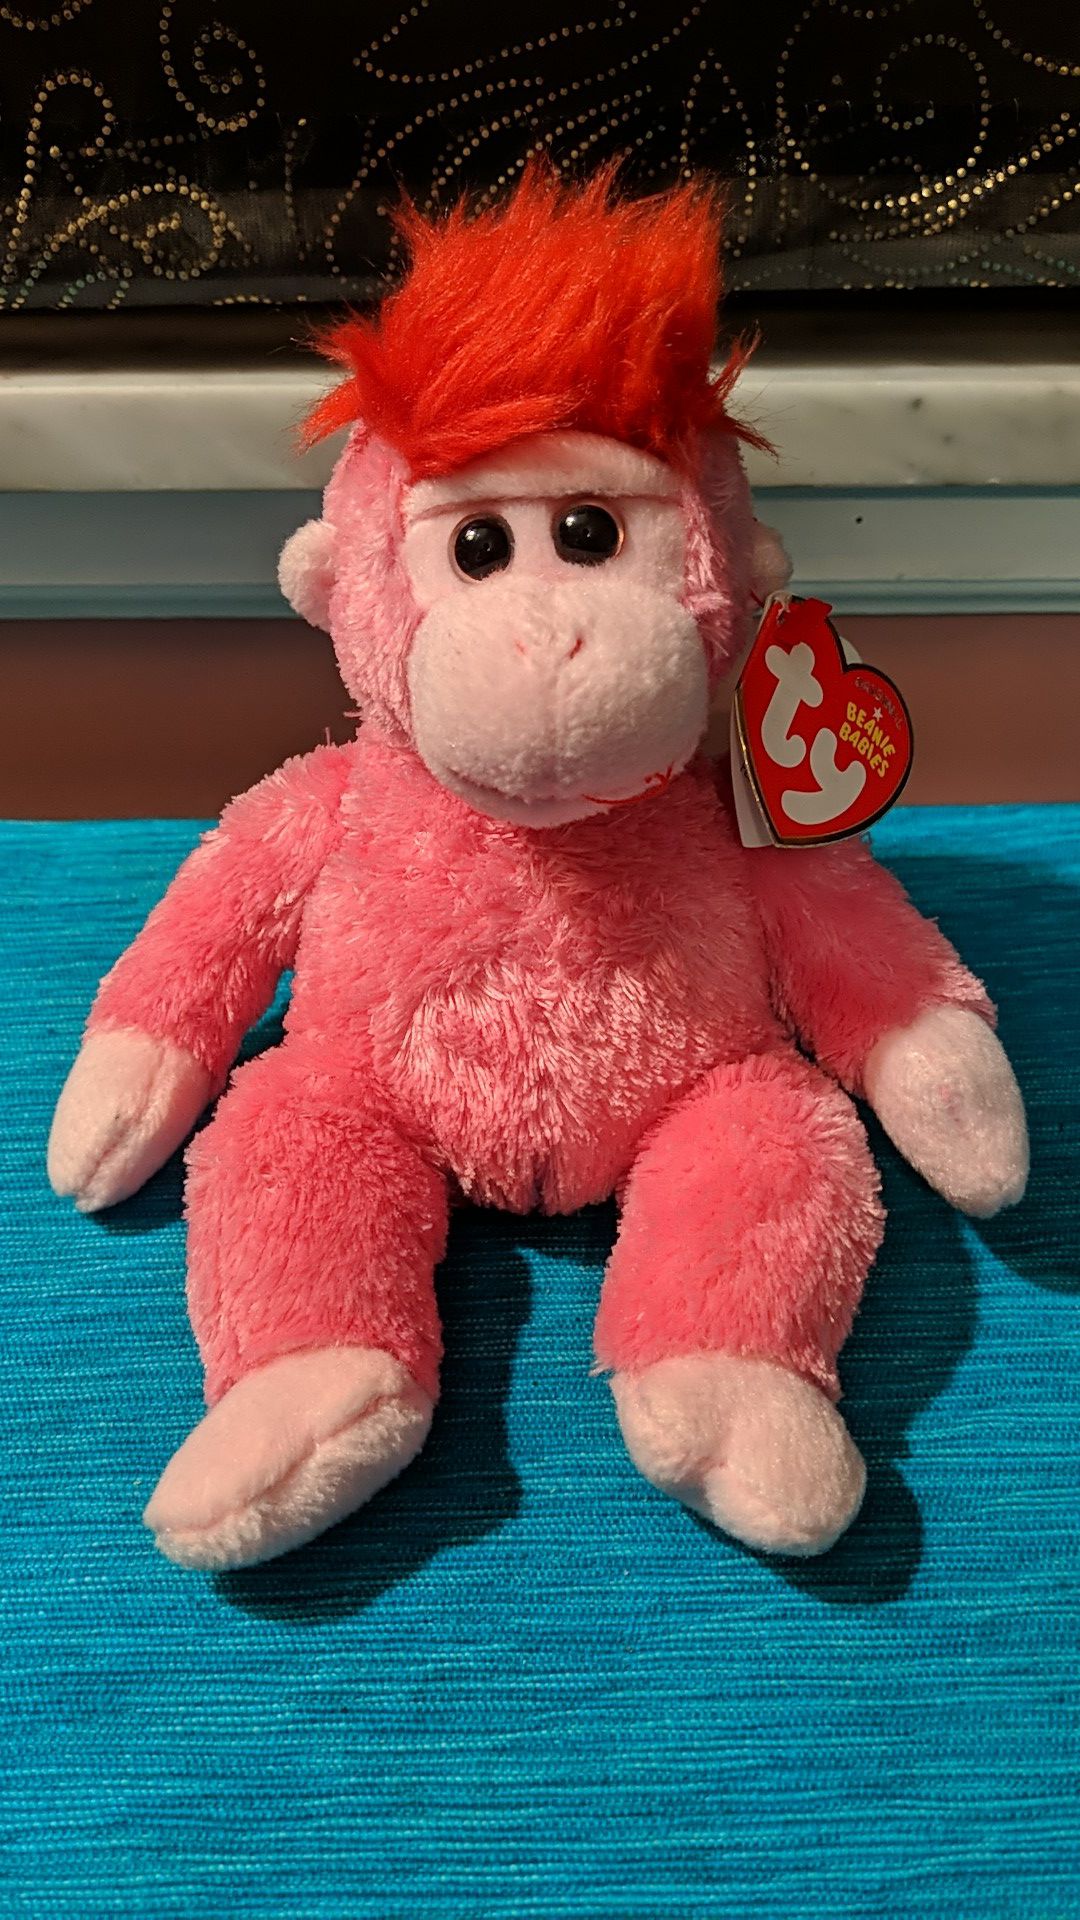 Ty Beanie Baby Charmer the Pink Monkey